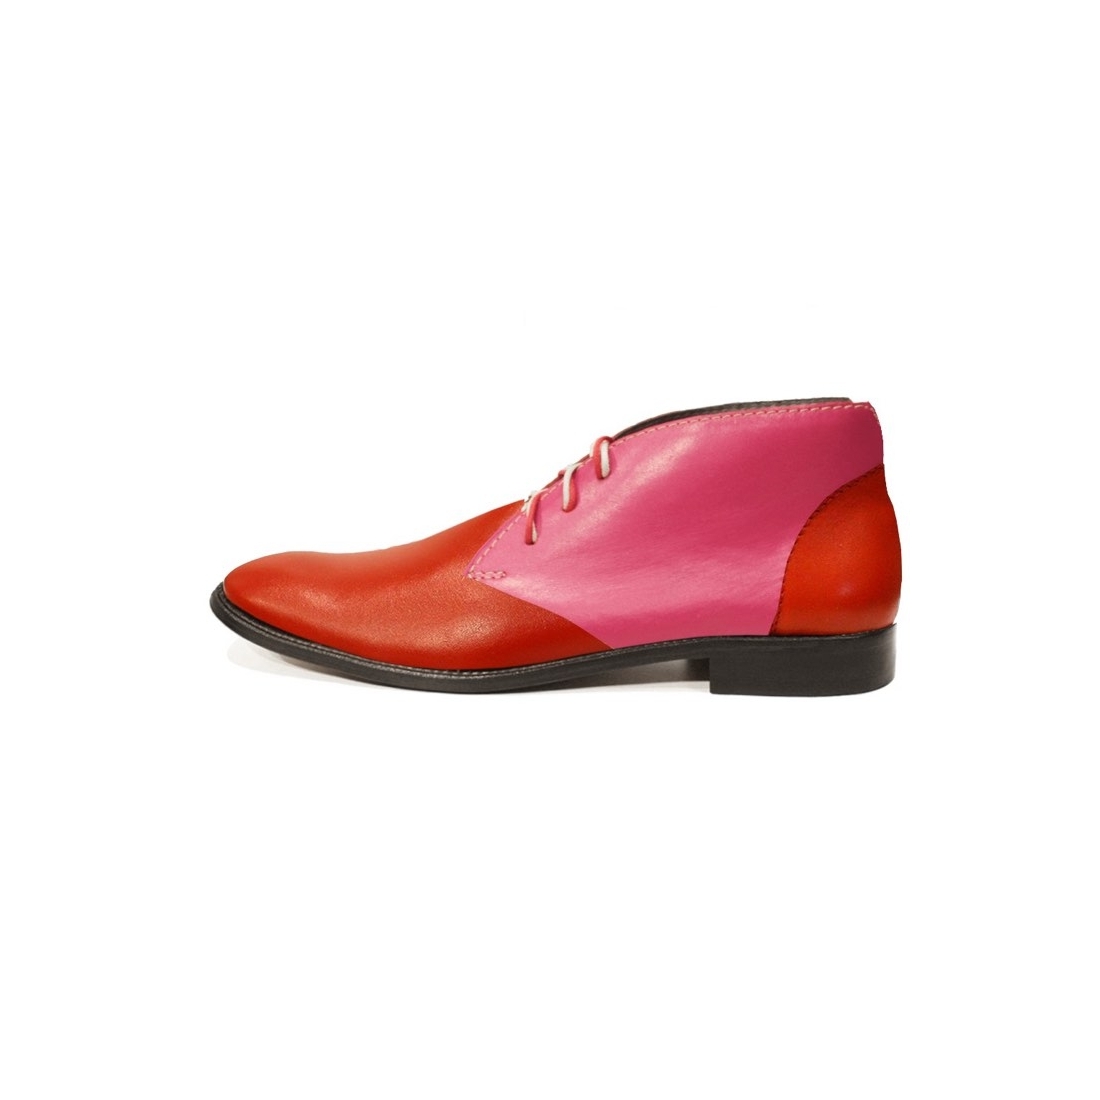 Modello Scaporro - Chukka Boots - Handmade Colorful Italian Leather Shoes